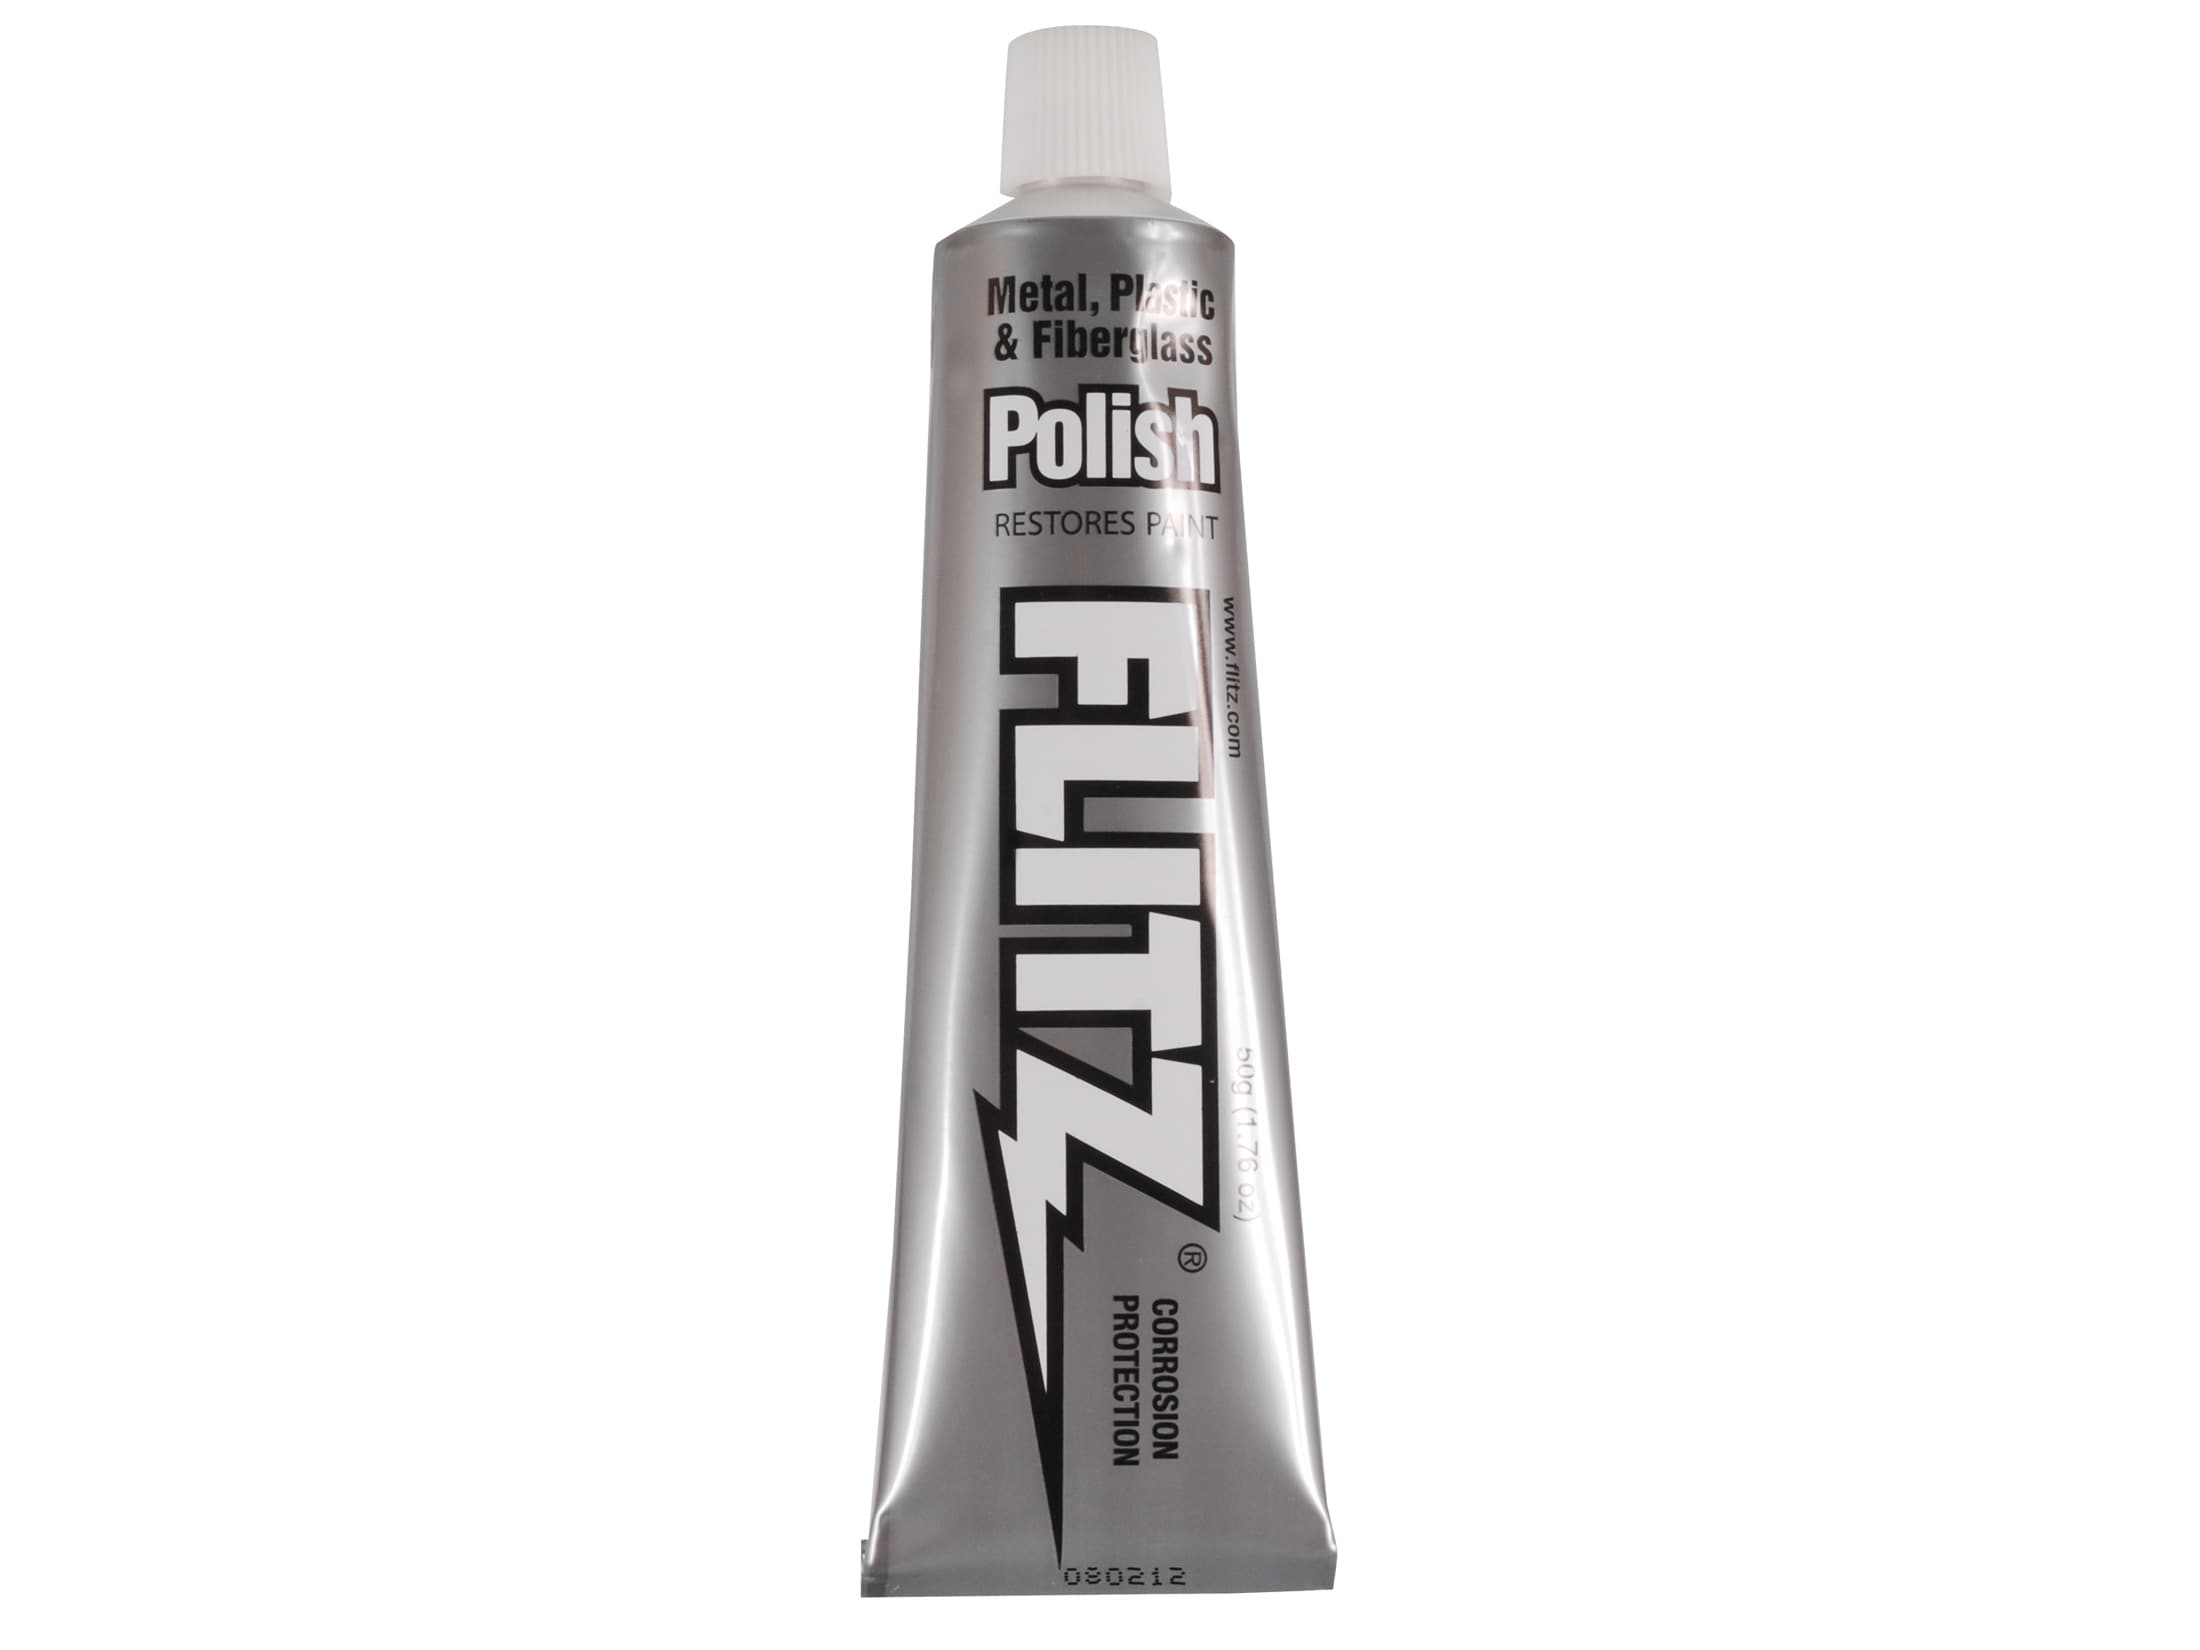 Flitz Multi-Purpose Polish and Cleaner Paste for Metal, Plastic, Single